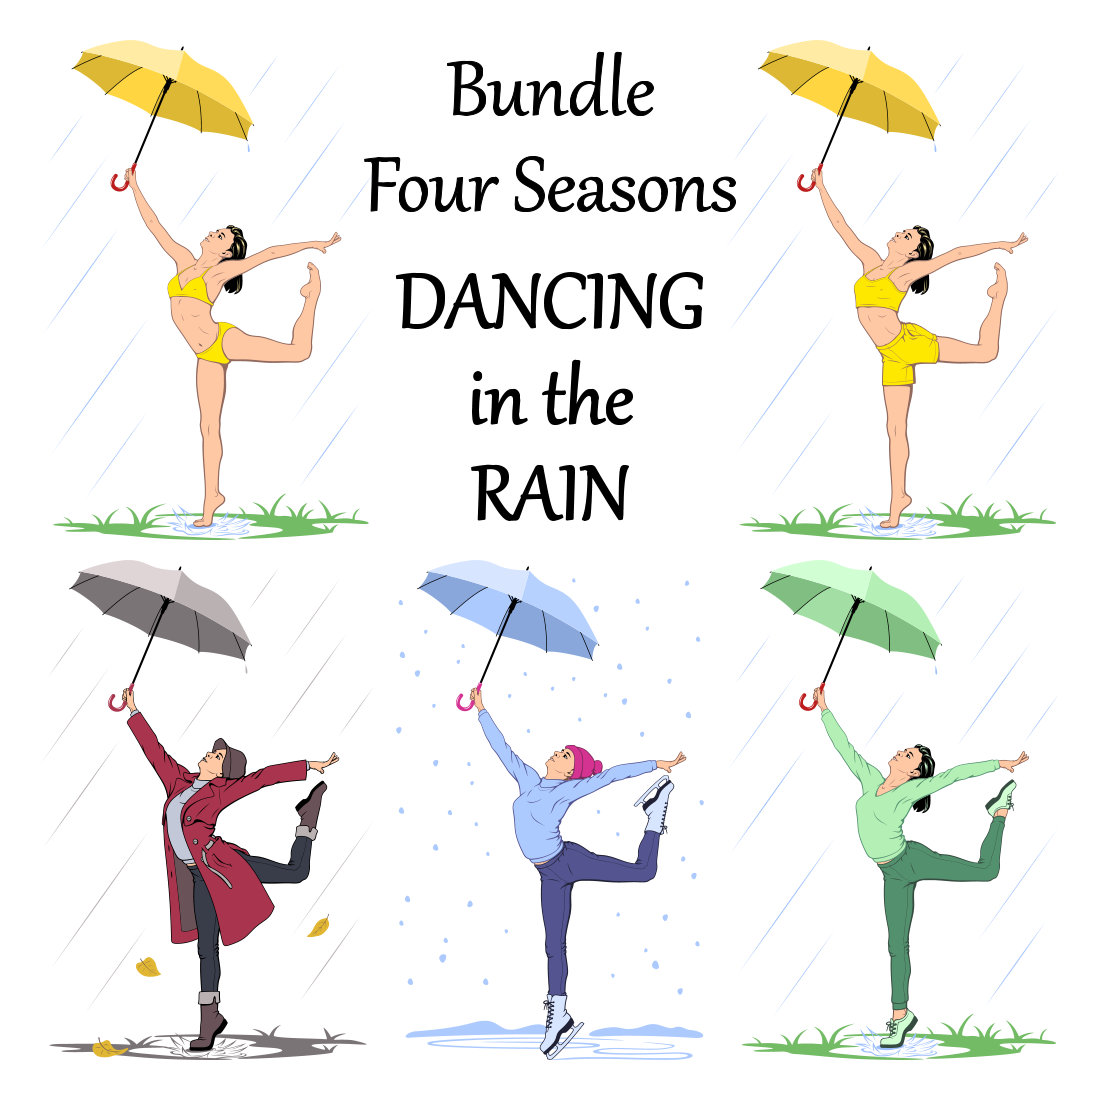 Girl Dancing in the Rain Graphics Bundle cover image.